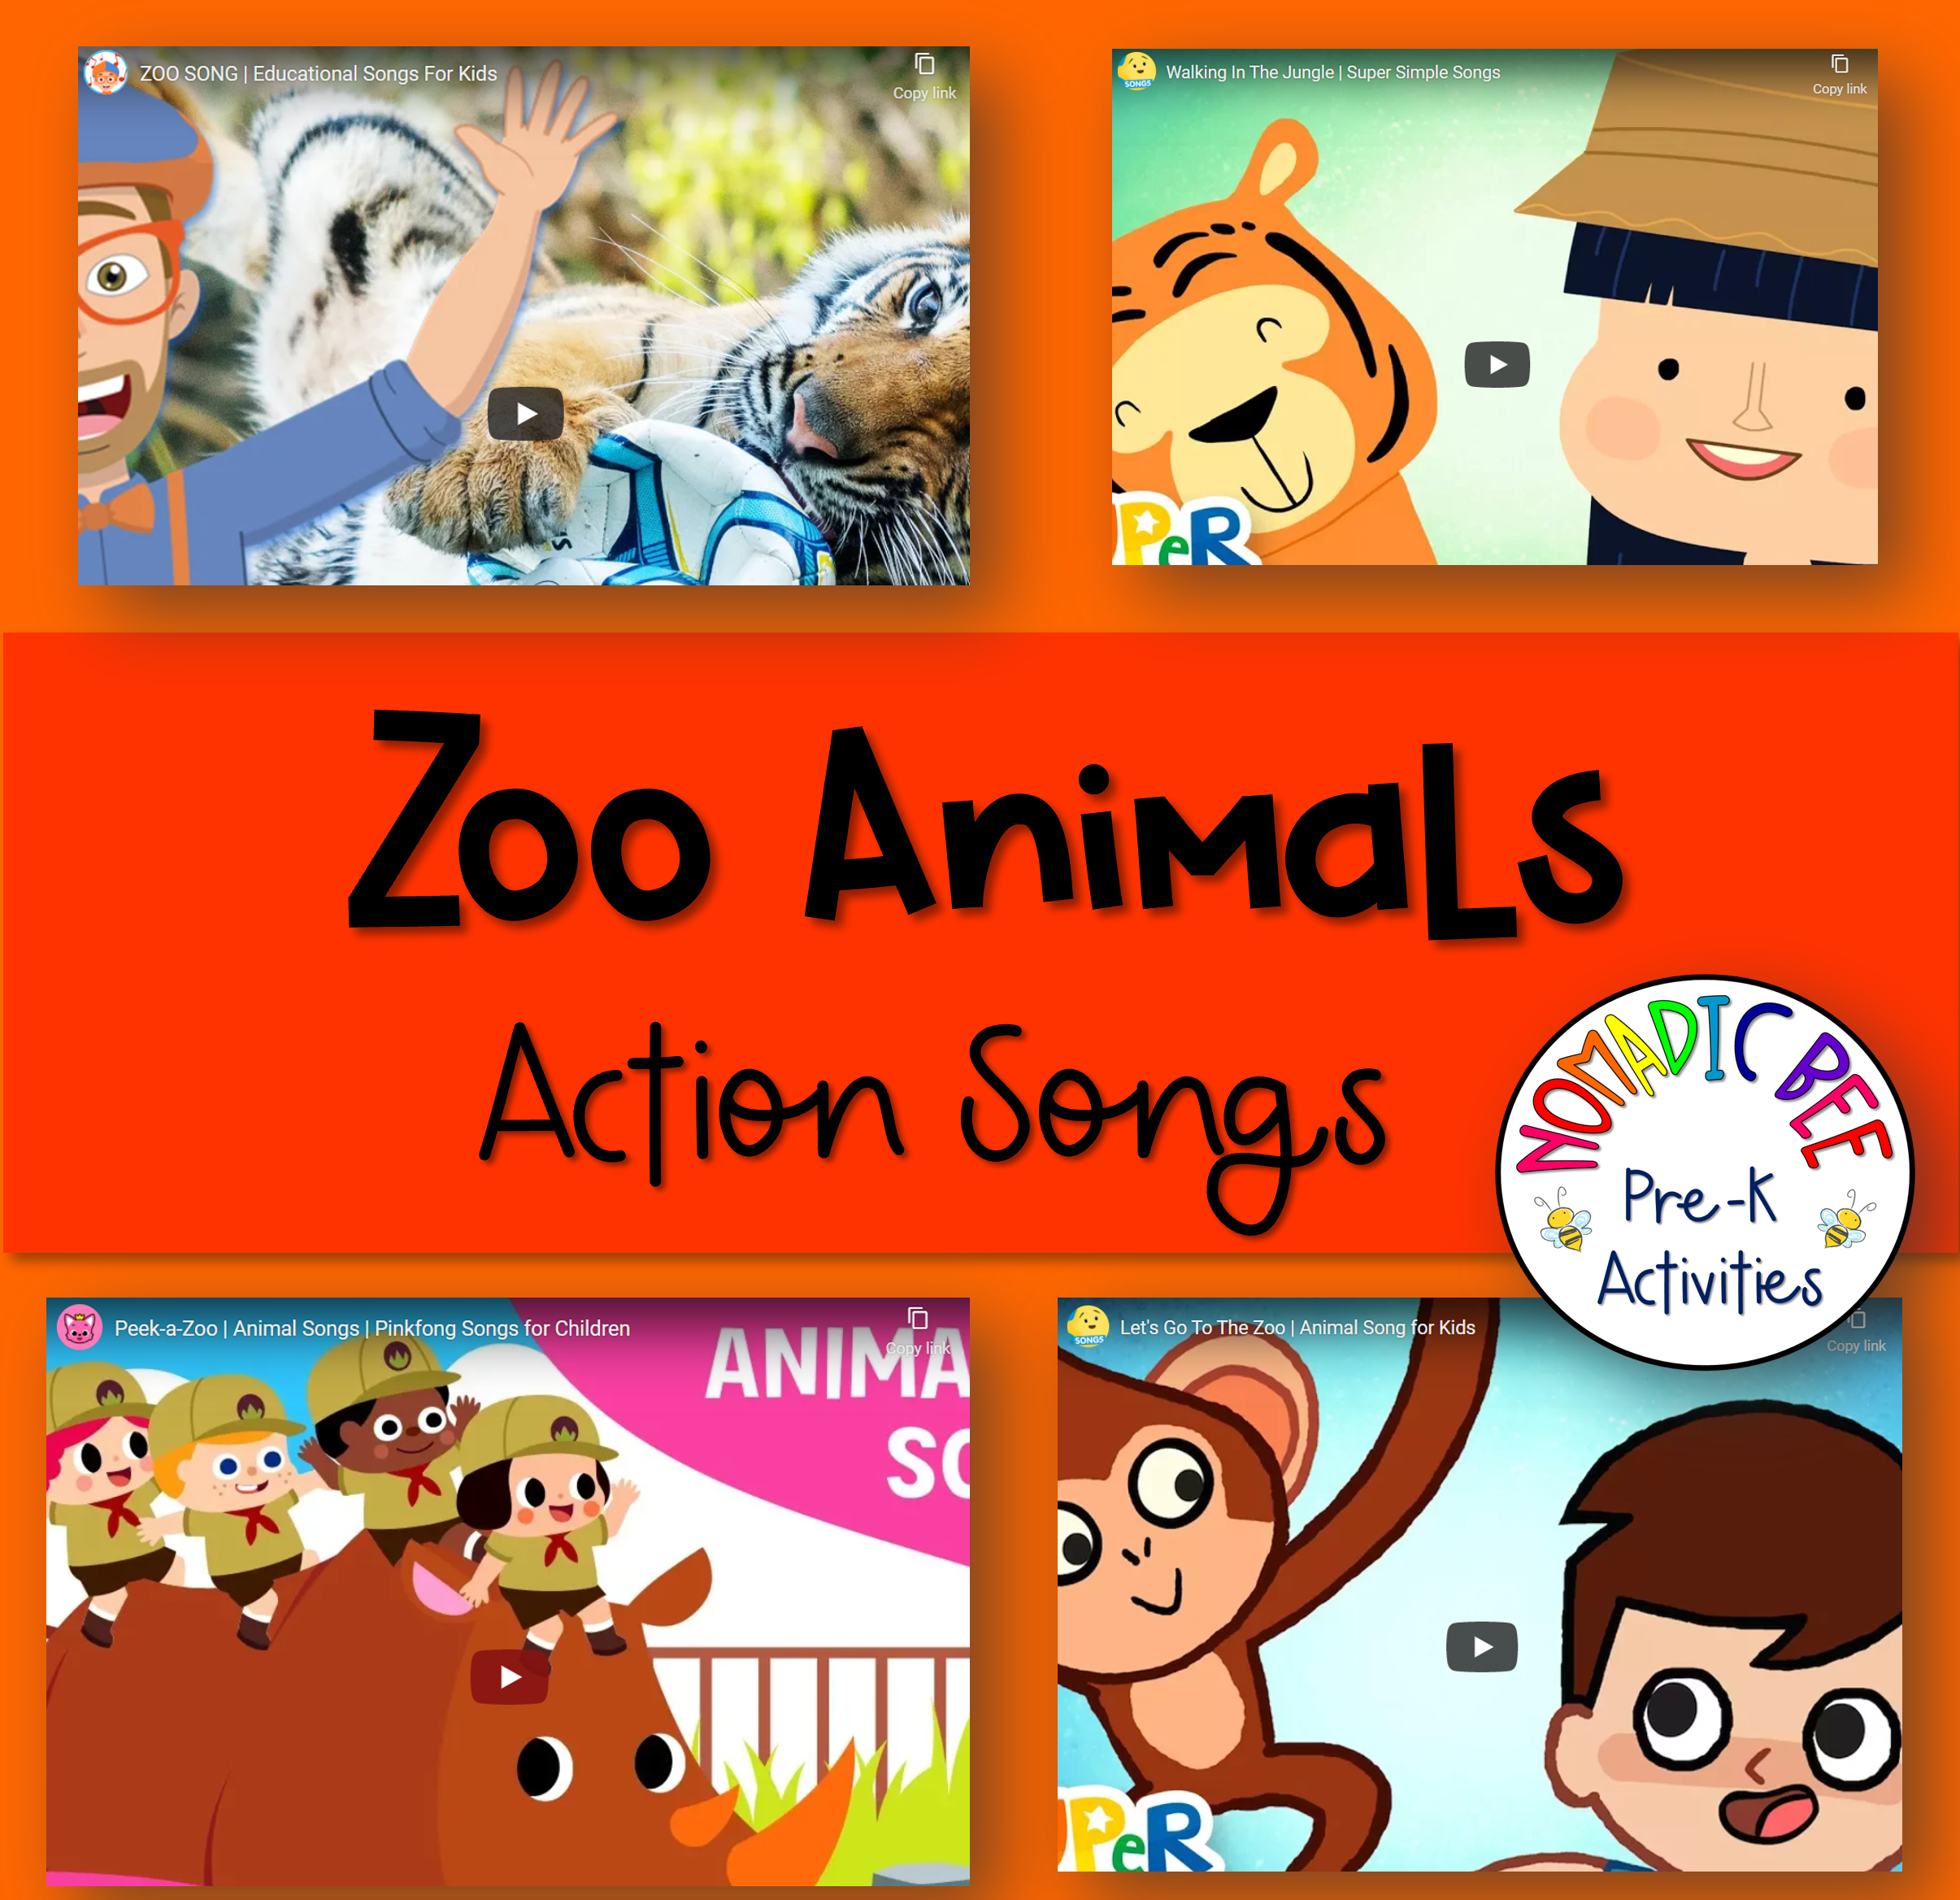 Zoo animals themed activities for PreK